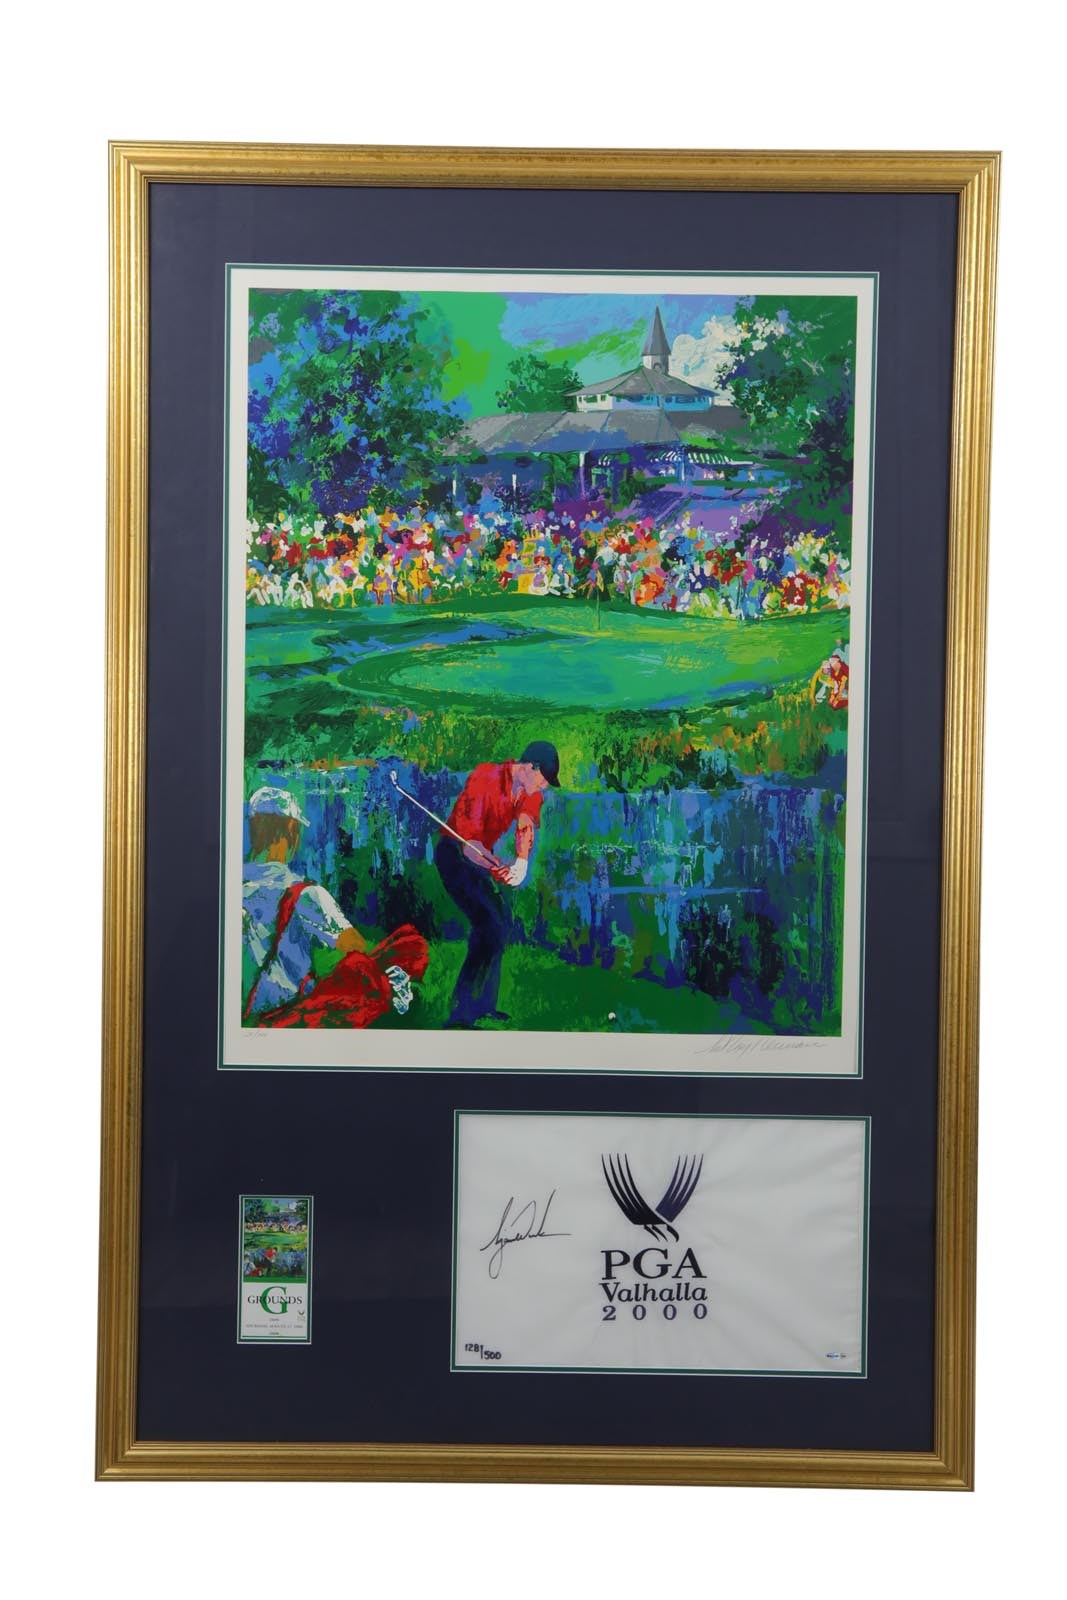 - 2000 LeRoy Neiman Signed "Valhalla" Print, Tiger Woods Signed Valhalla Flag & Valhalla Ticket Display